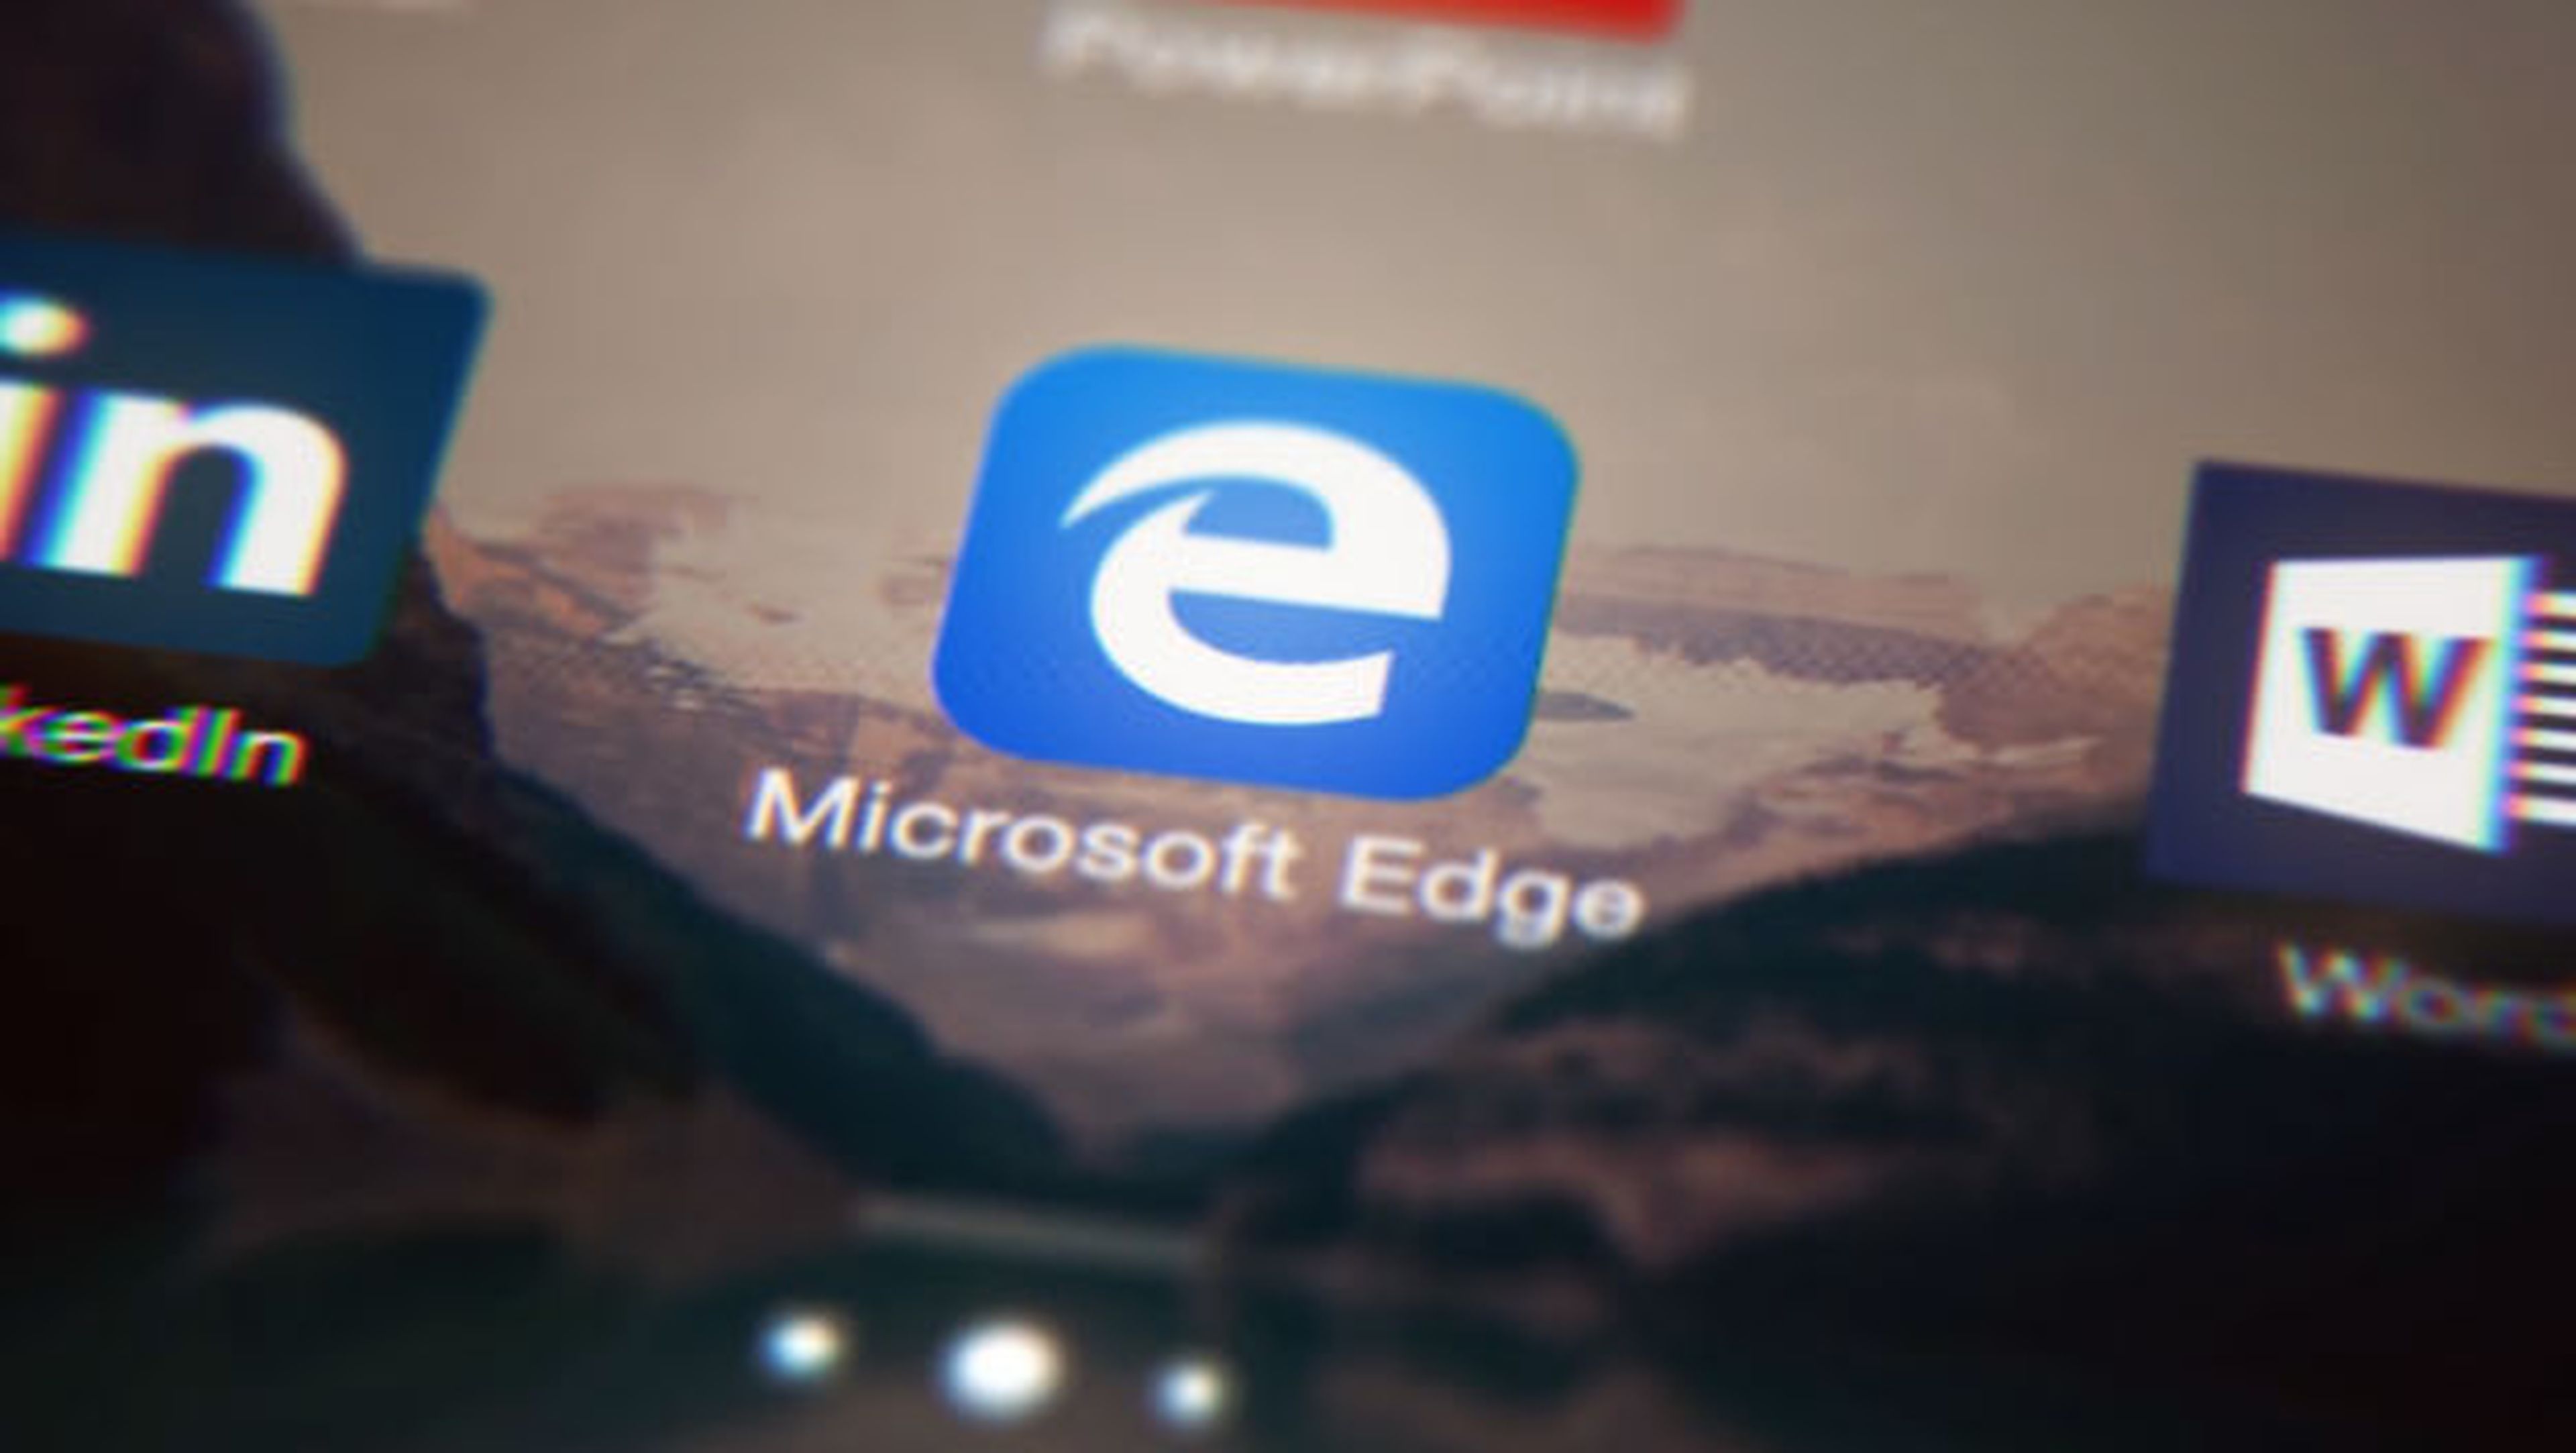 Microsoft Edge, ya disponible para Android y iPhone.